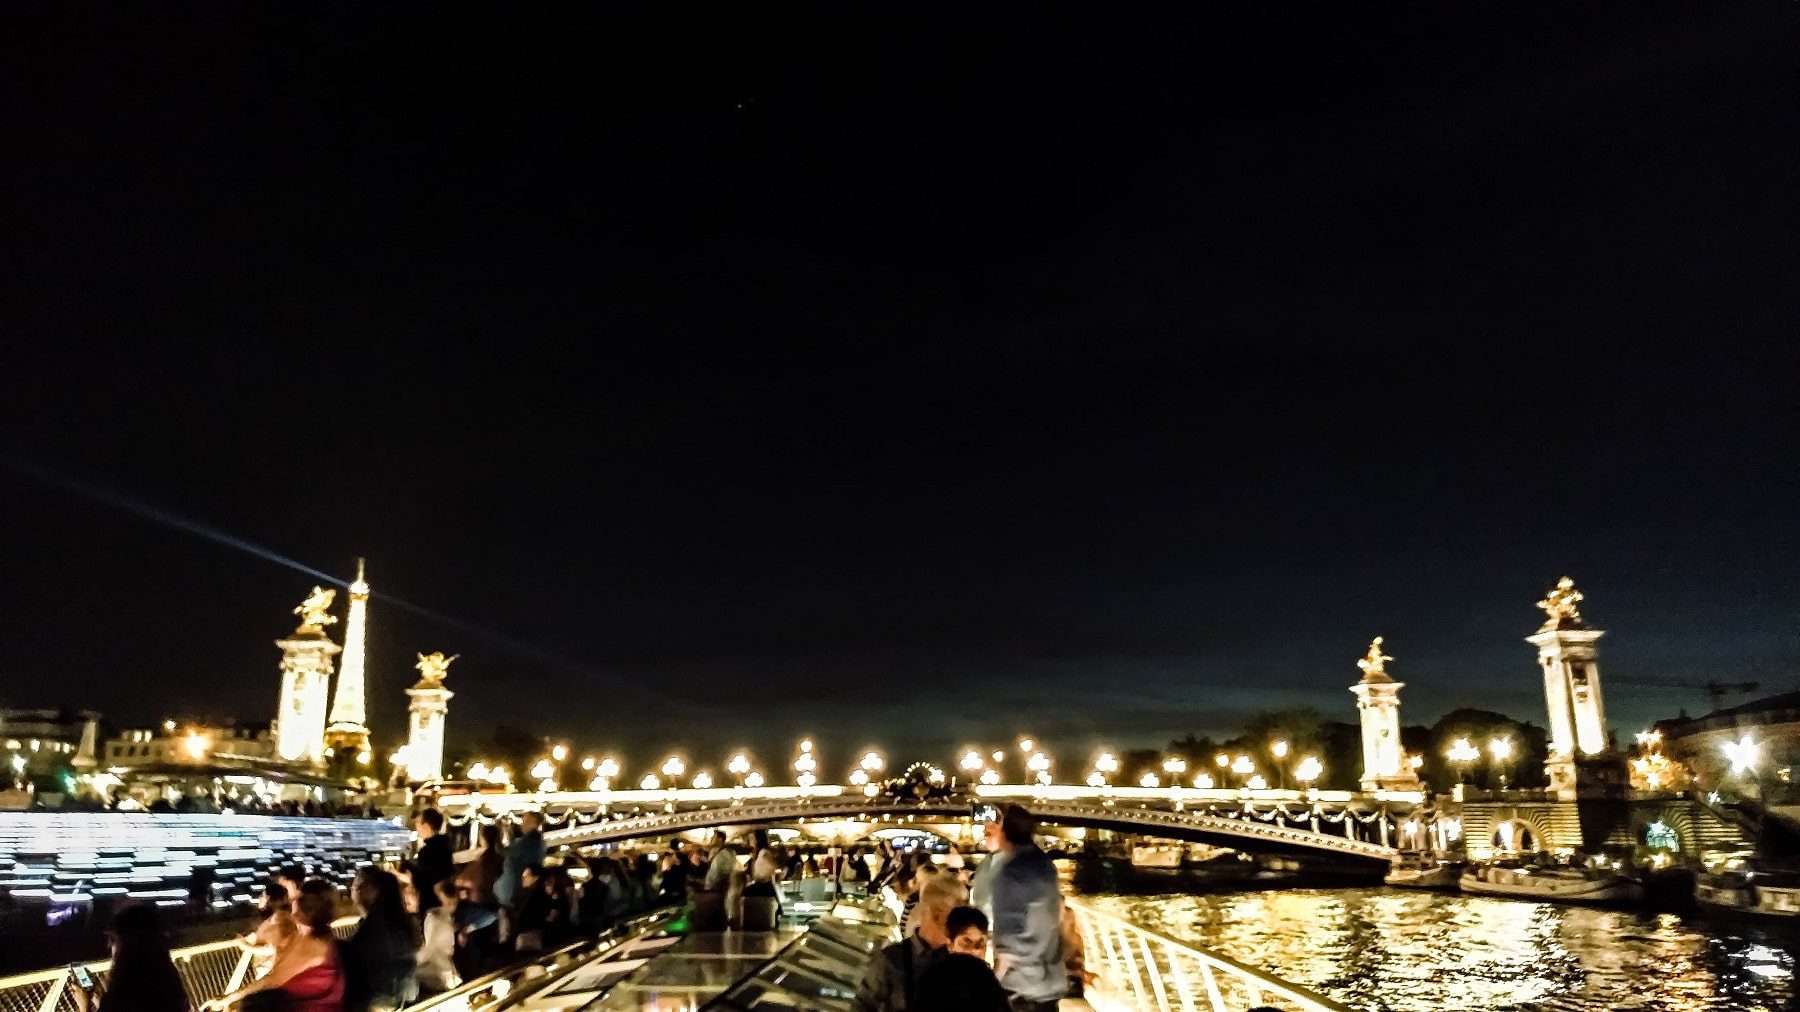 Cruising around on the seine river in Paris at night